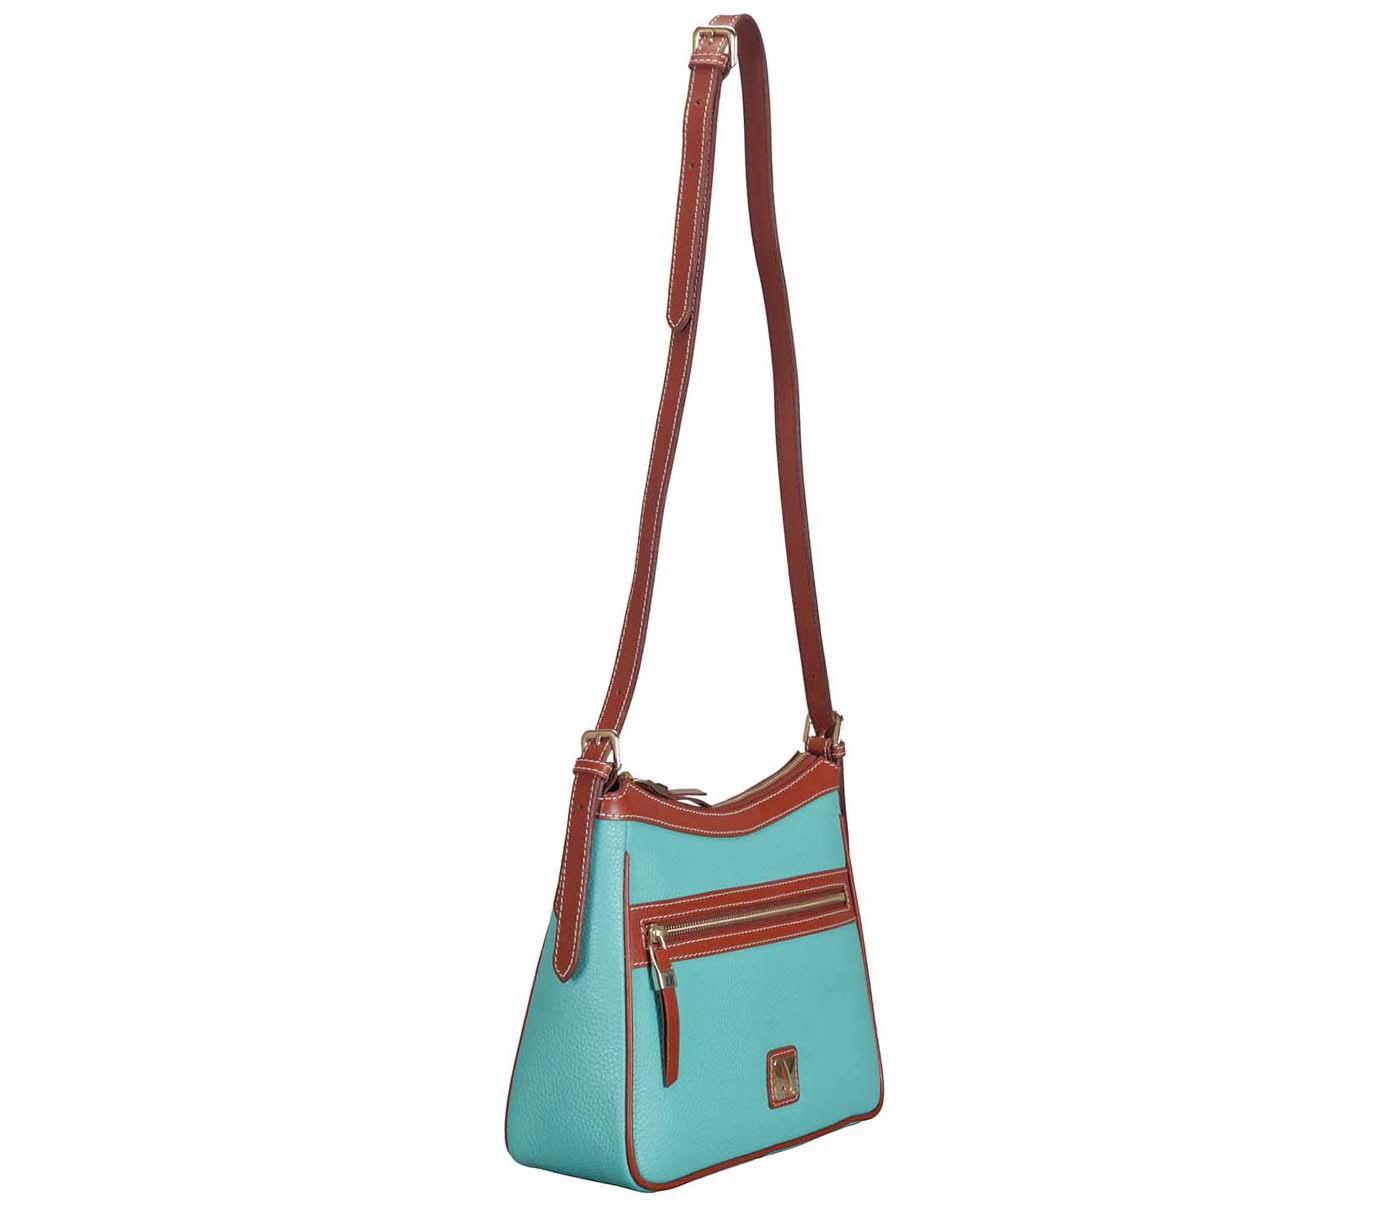 Handbag-Berrta-Sling cross body bag in Genuine Leather - Seagreen/Tan